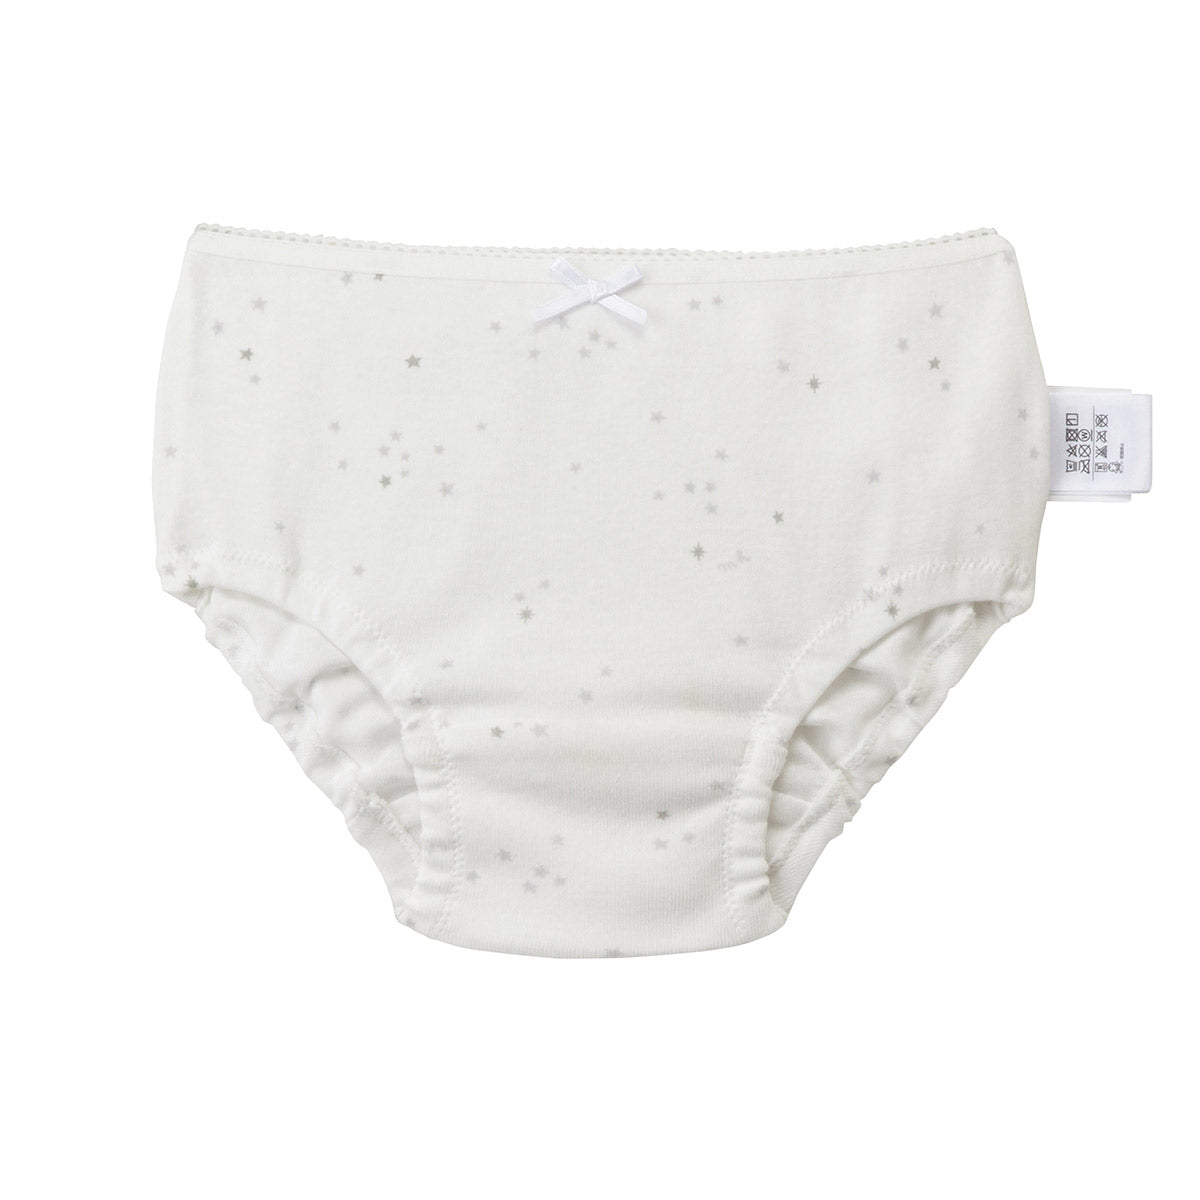 Patterned Underpants - 10-2493-454-04-90